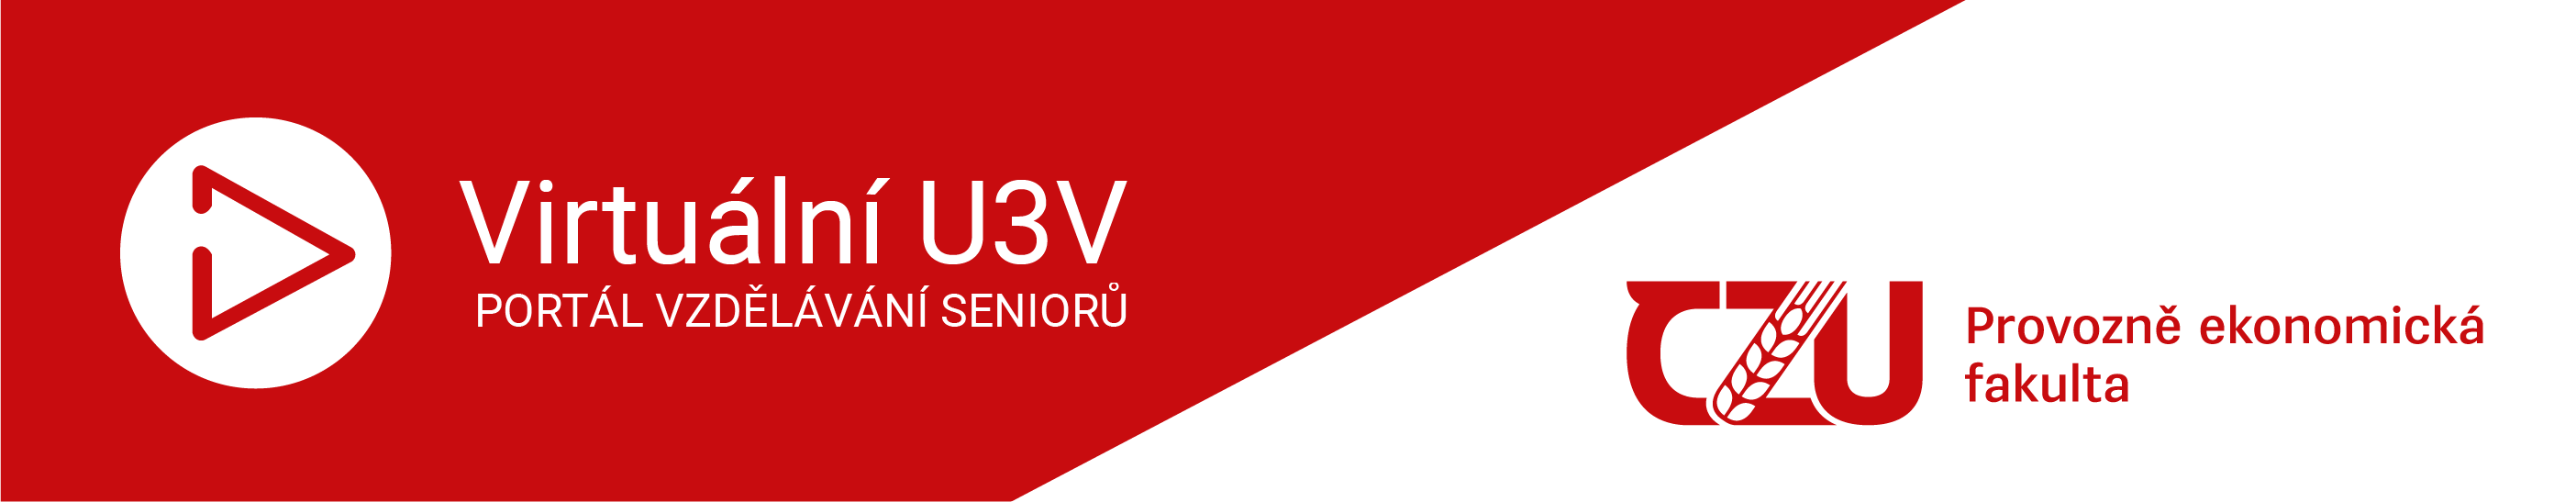 Logo VU3V 09